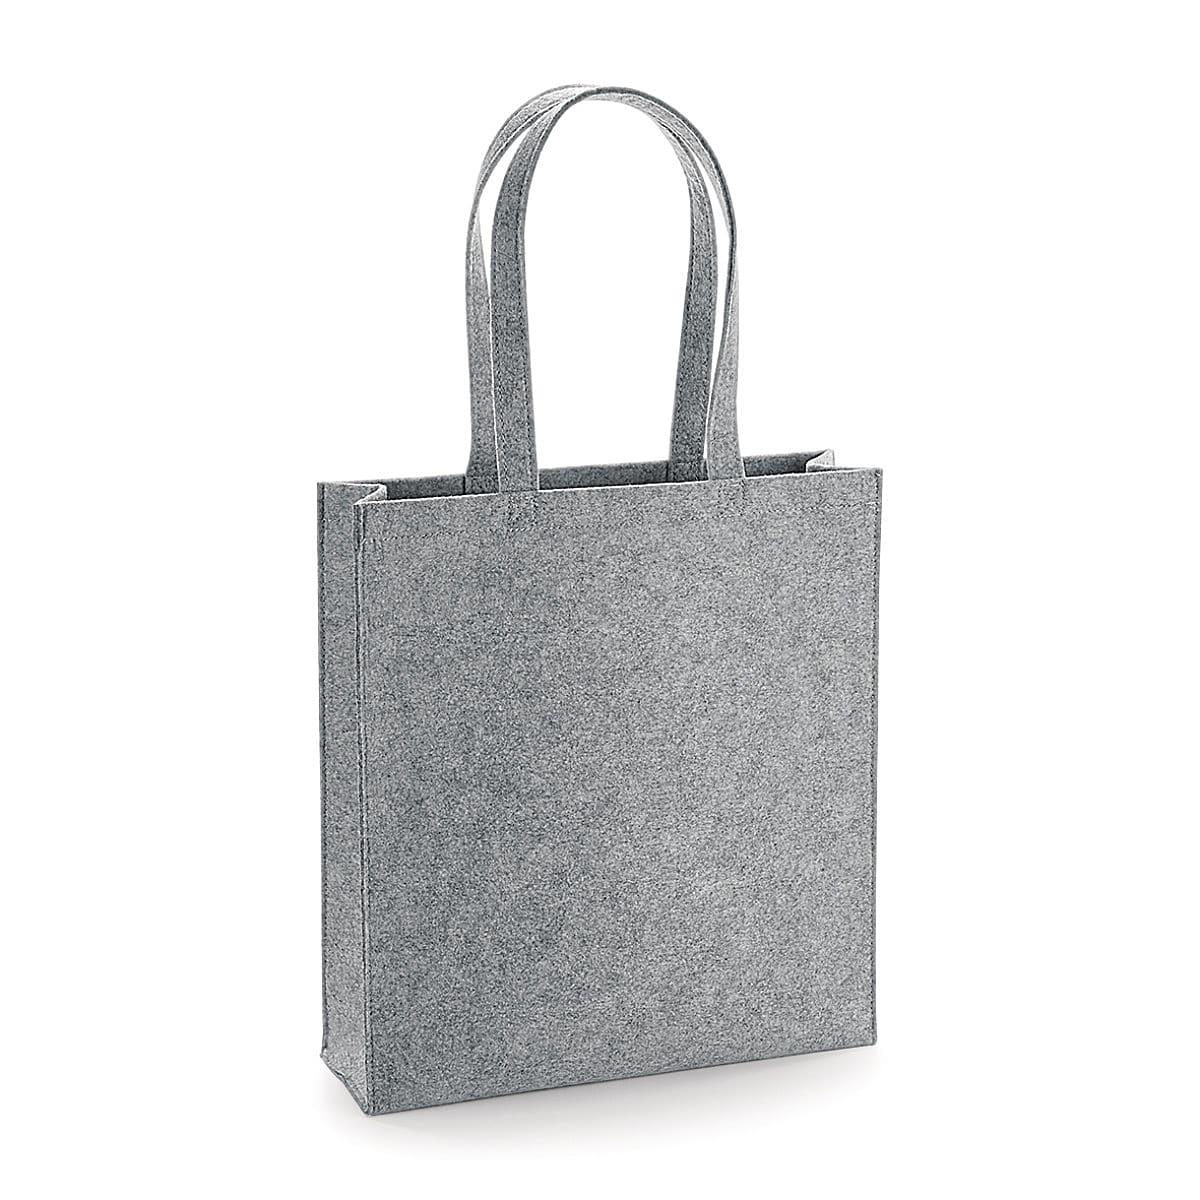 Bagbase Felt Tote Bag in Grey Melange (Product Code: BG723)